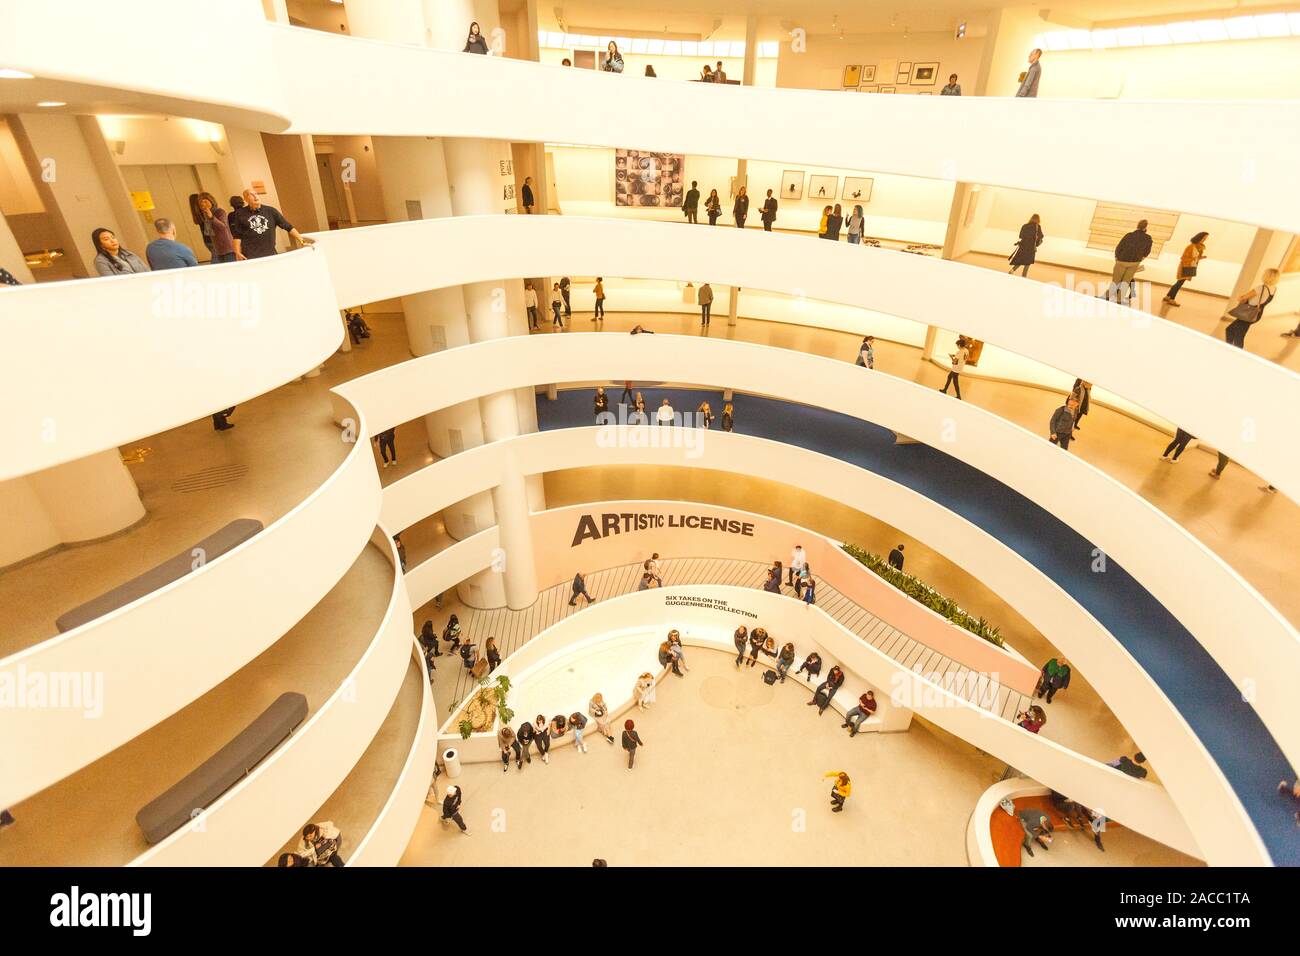 The Spiral Rotunda atrium inside the Guggenheim Museum, Fifth Avenue, Manhattan, New York City, United States of America. Stock Photo